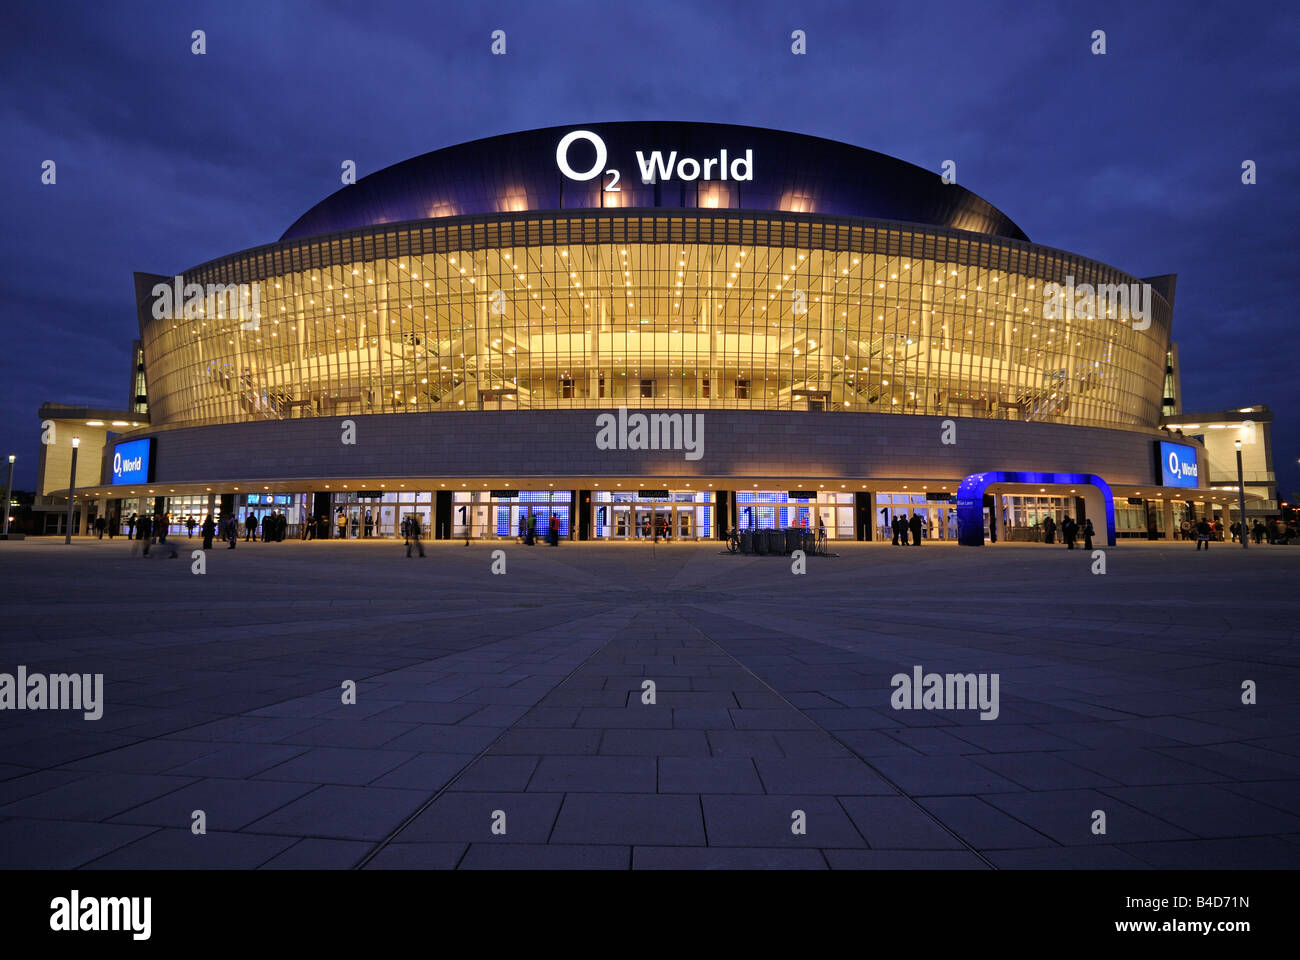 O2 World, O2 Arena of the Anschutz Entertainment Group, Berlin Friedrichshain, Germany, Europe. Stock Photo